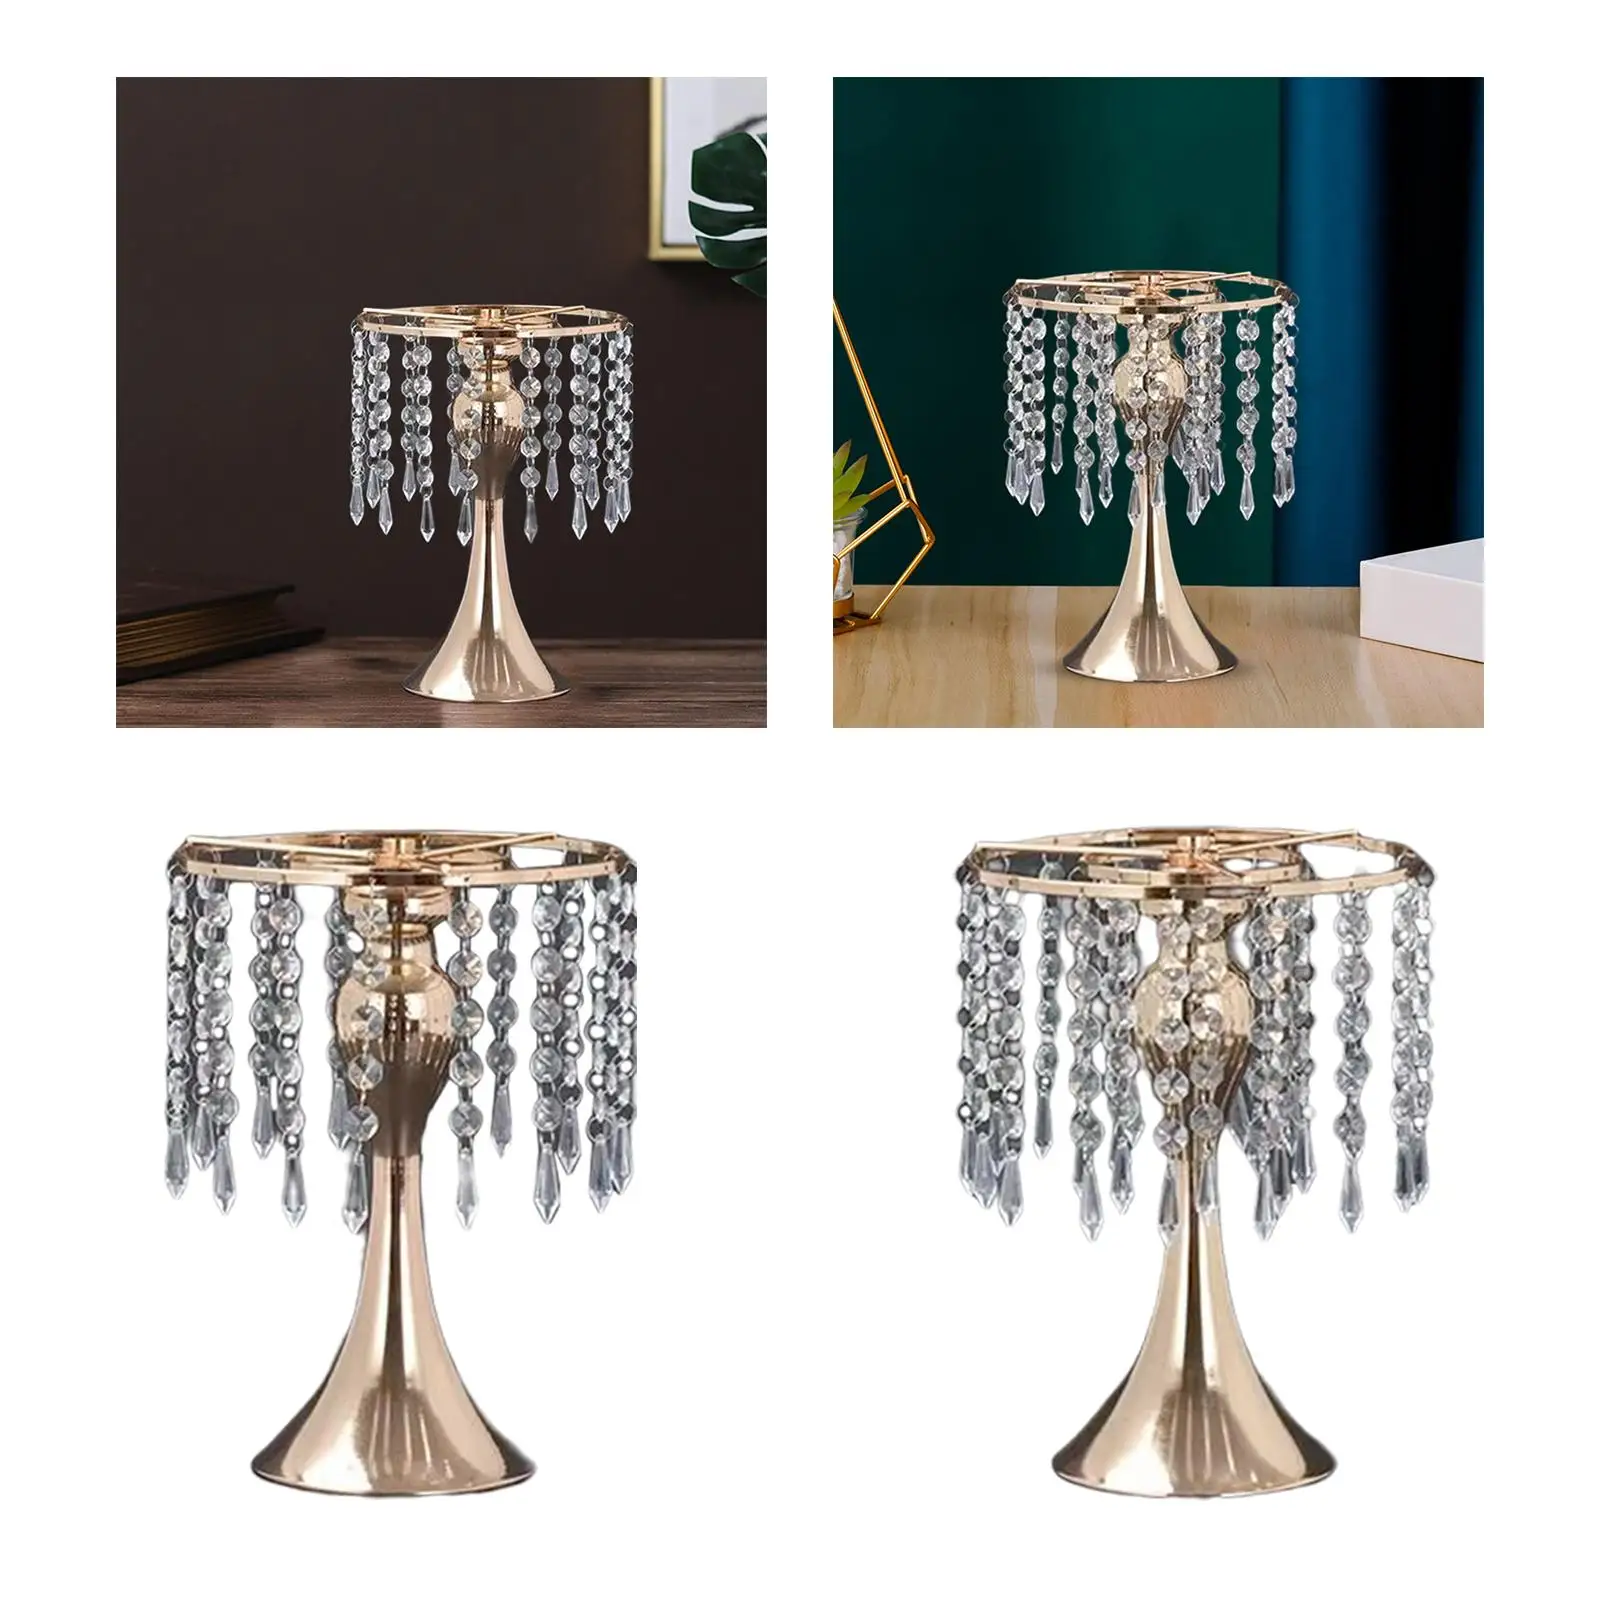 Versatile Crystal Flower Stand Table Centerpiece for Wedding Reception Decor